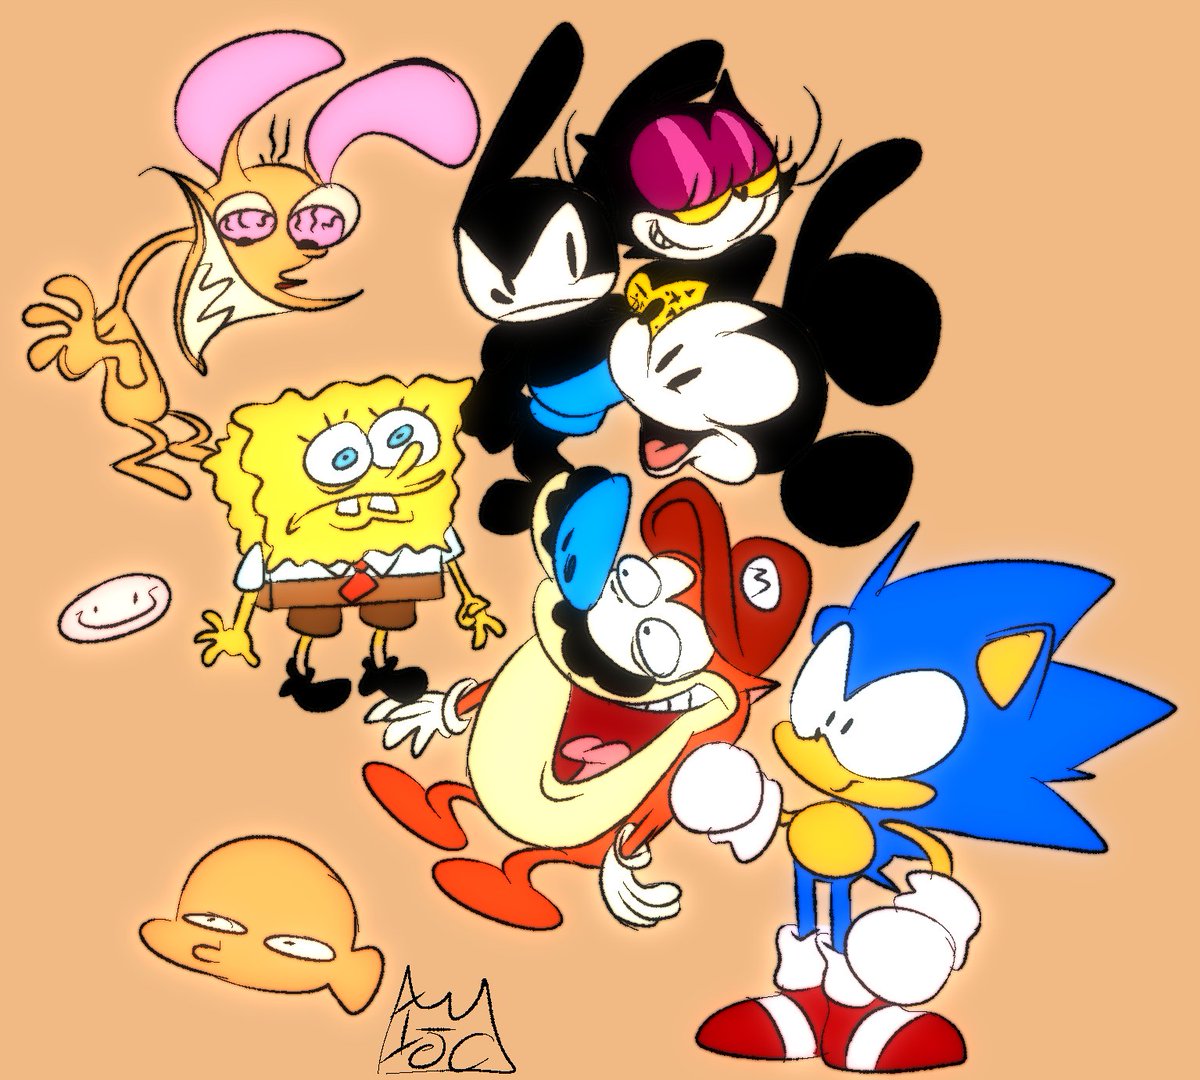 Goofy ass Doodles

#spongebob #renandstimpy #mario #sonic #Mickeymouse #gumball #felixthecat #Oswaldtheluckyrabbit #finn